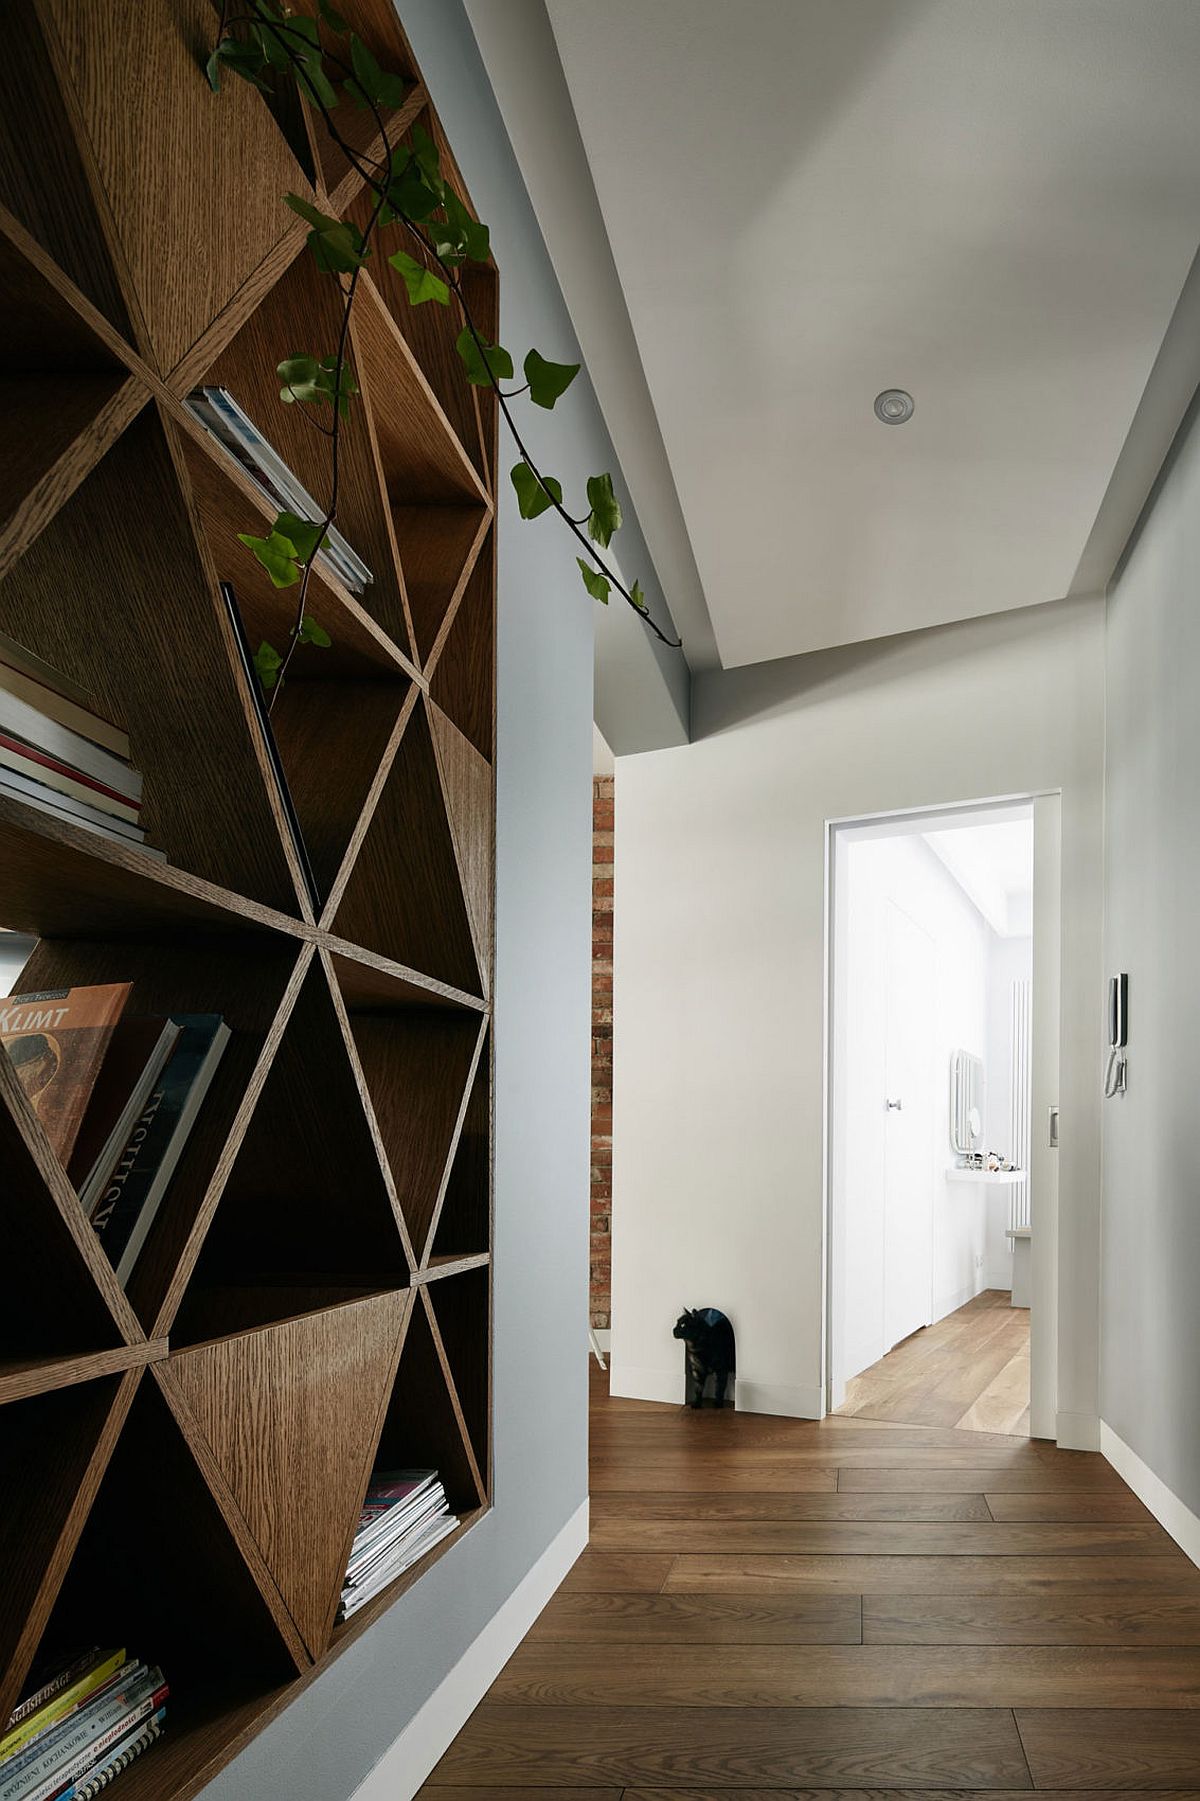 Wooden-bookshelf-with-geo-style